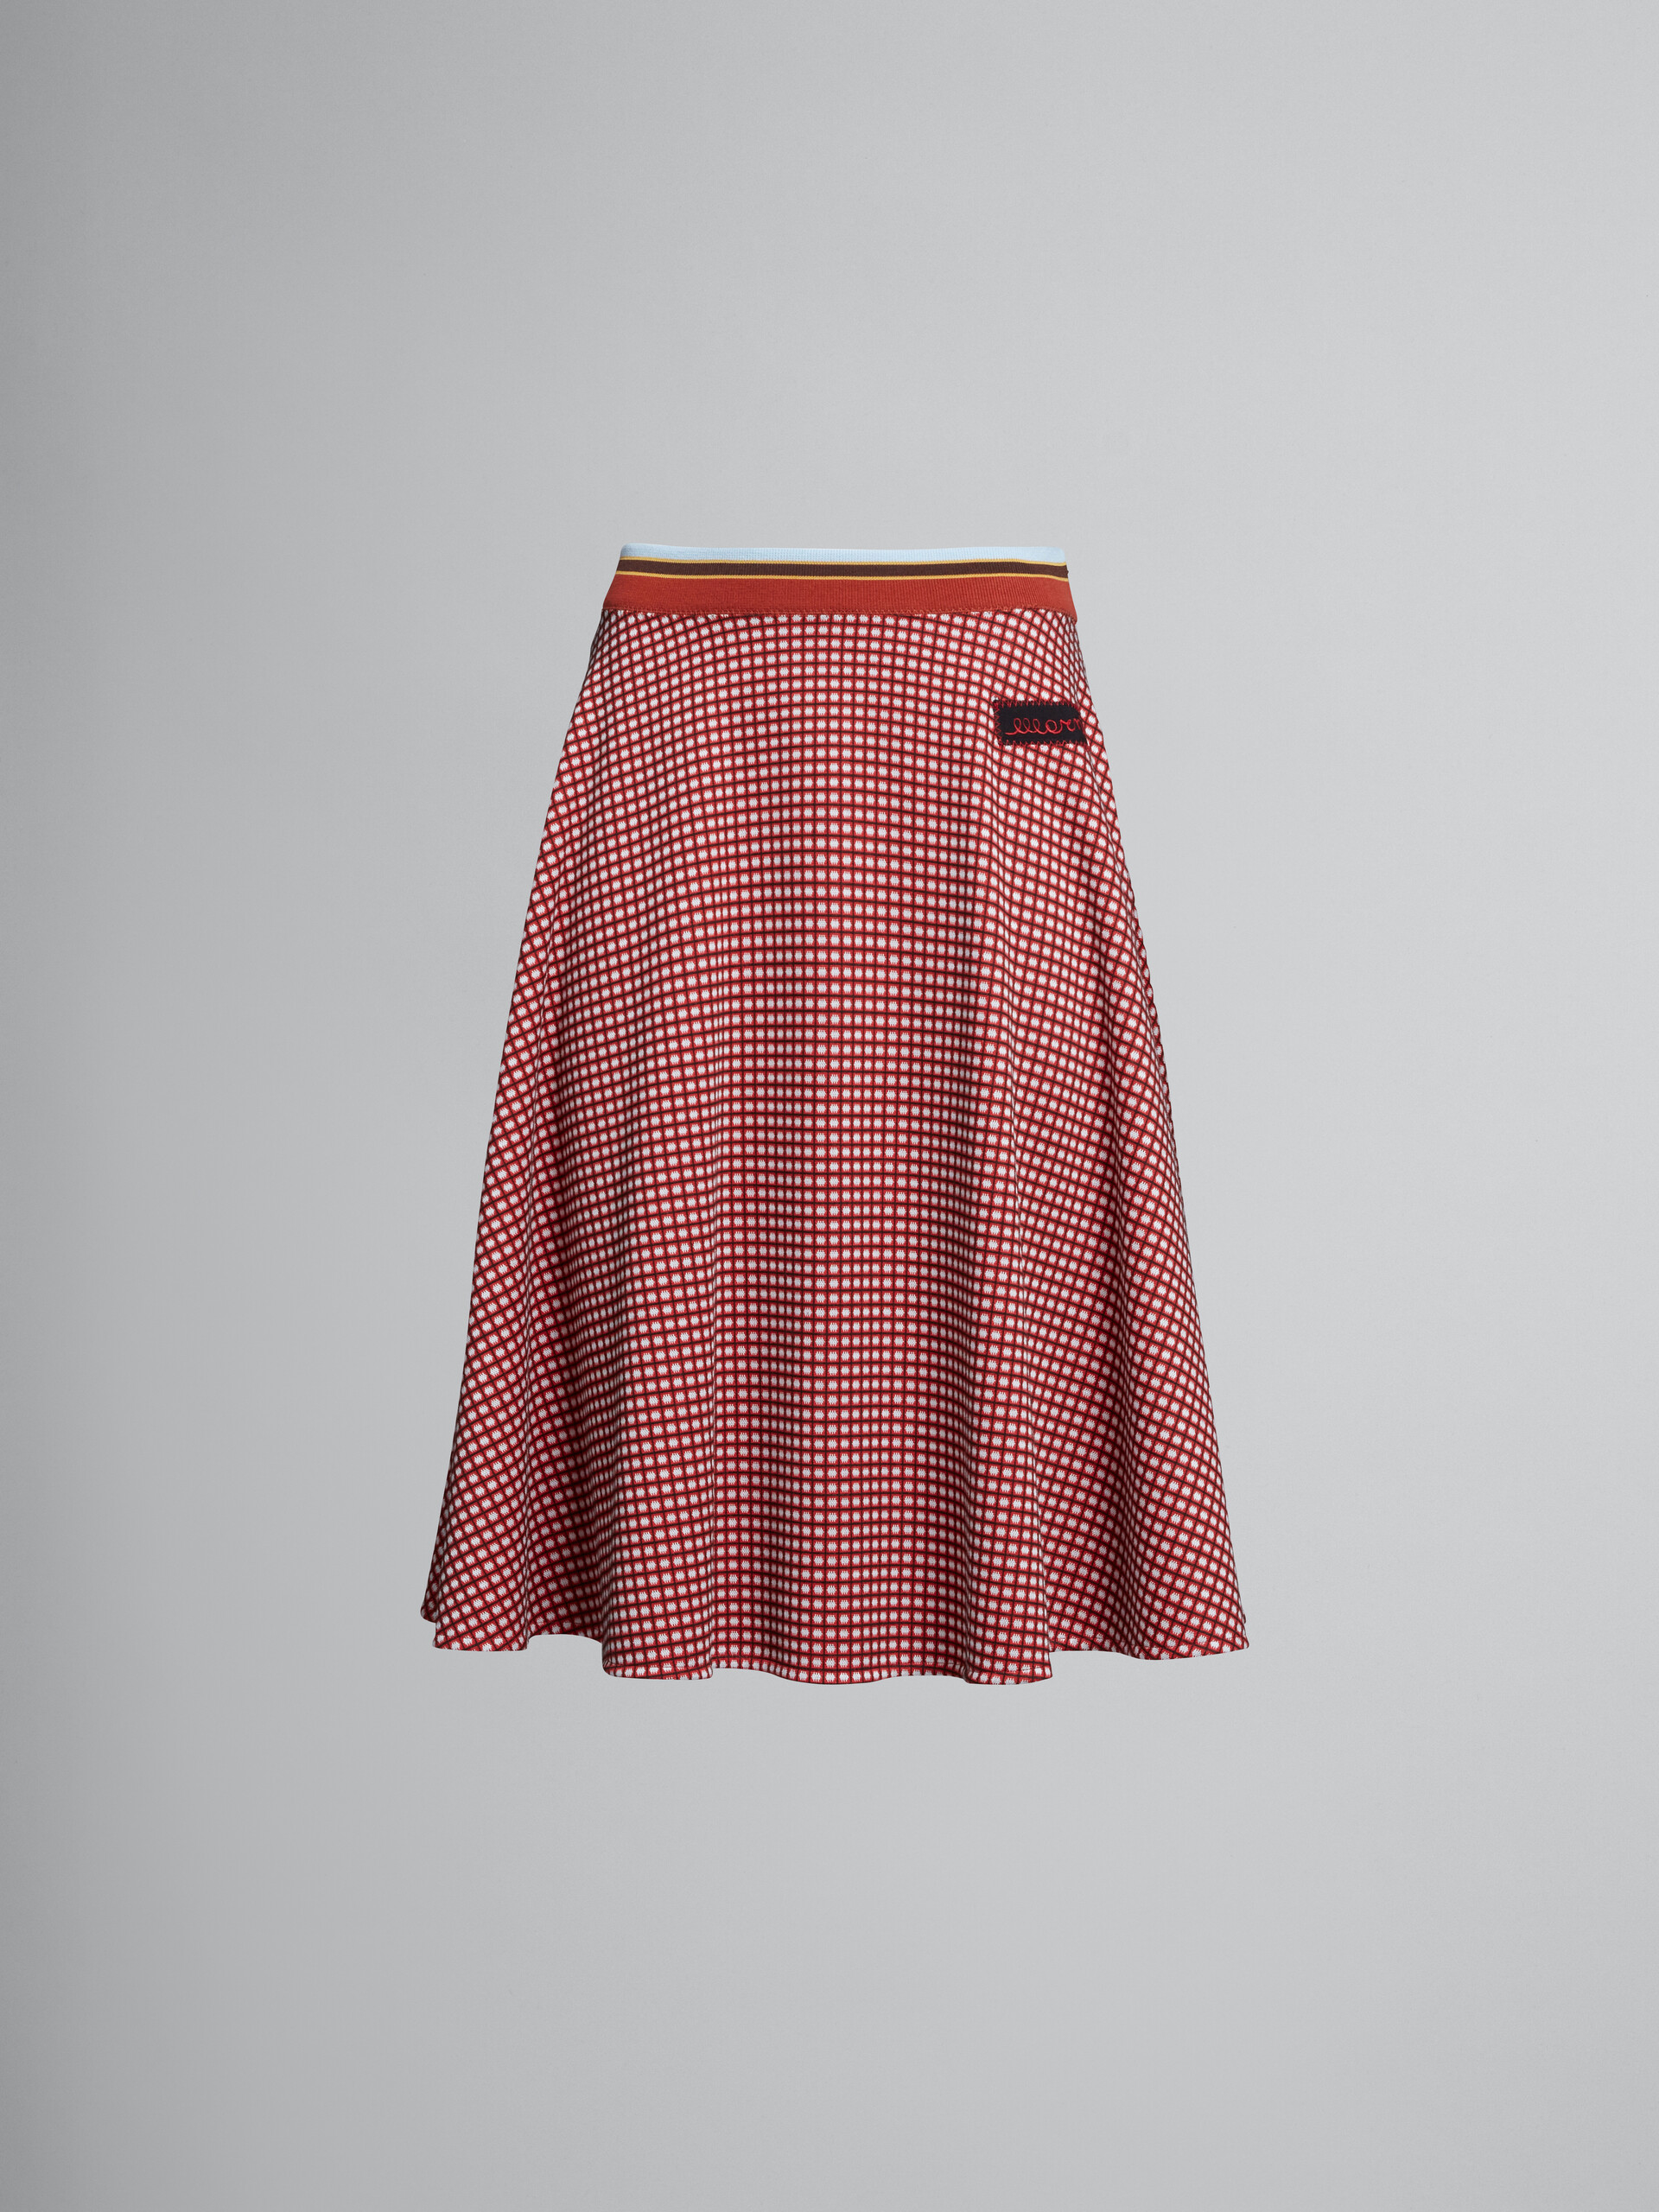 Orange jacquard jersey skirt with micro checks - Skirts - Image 1